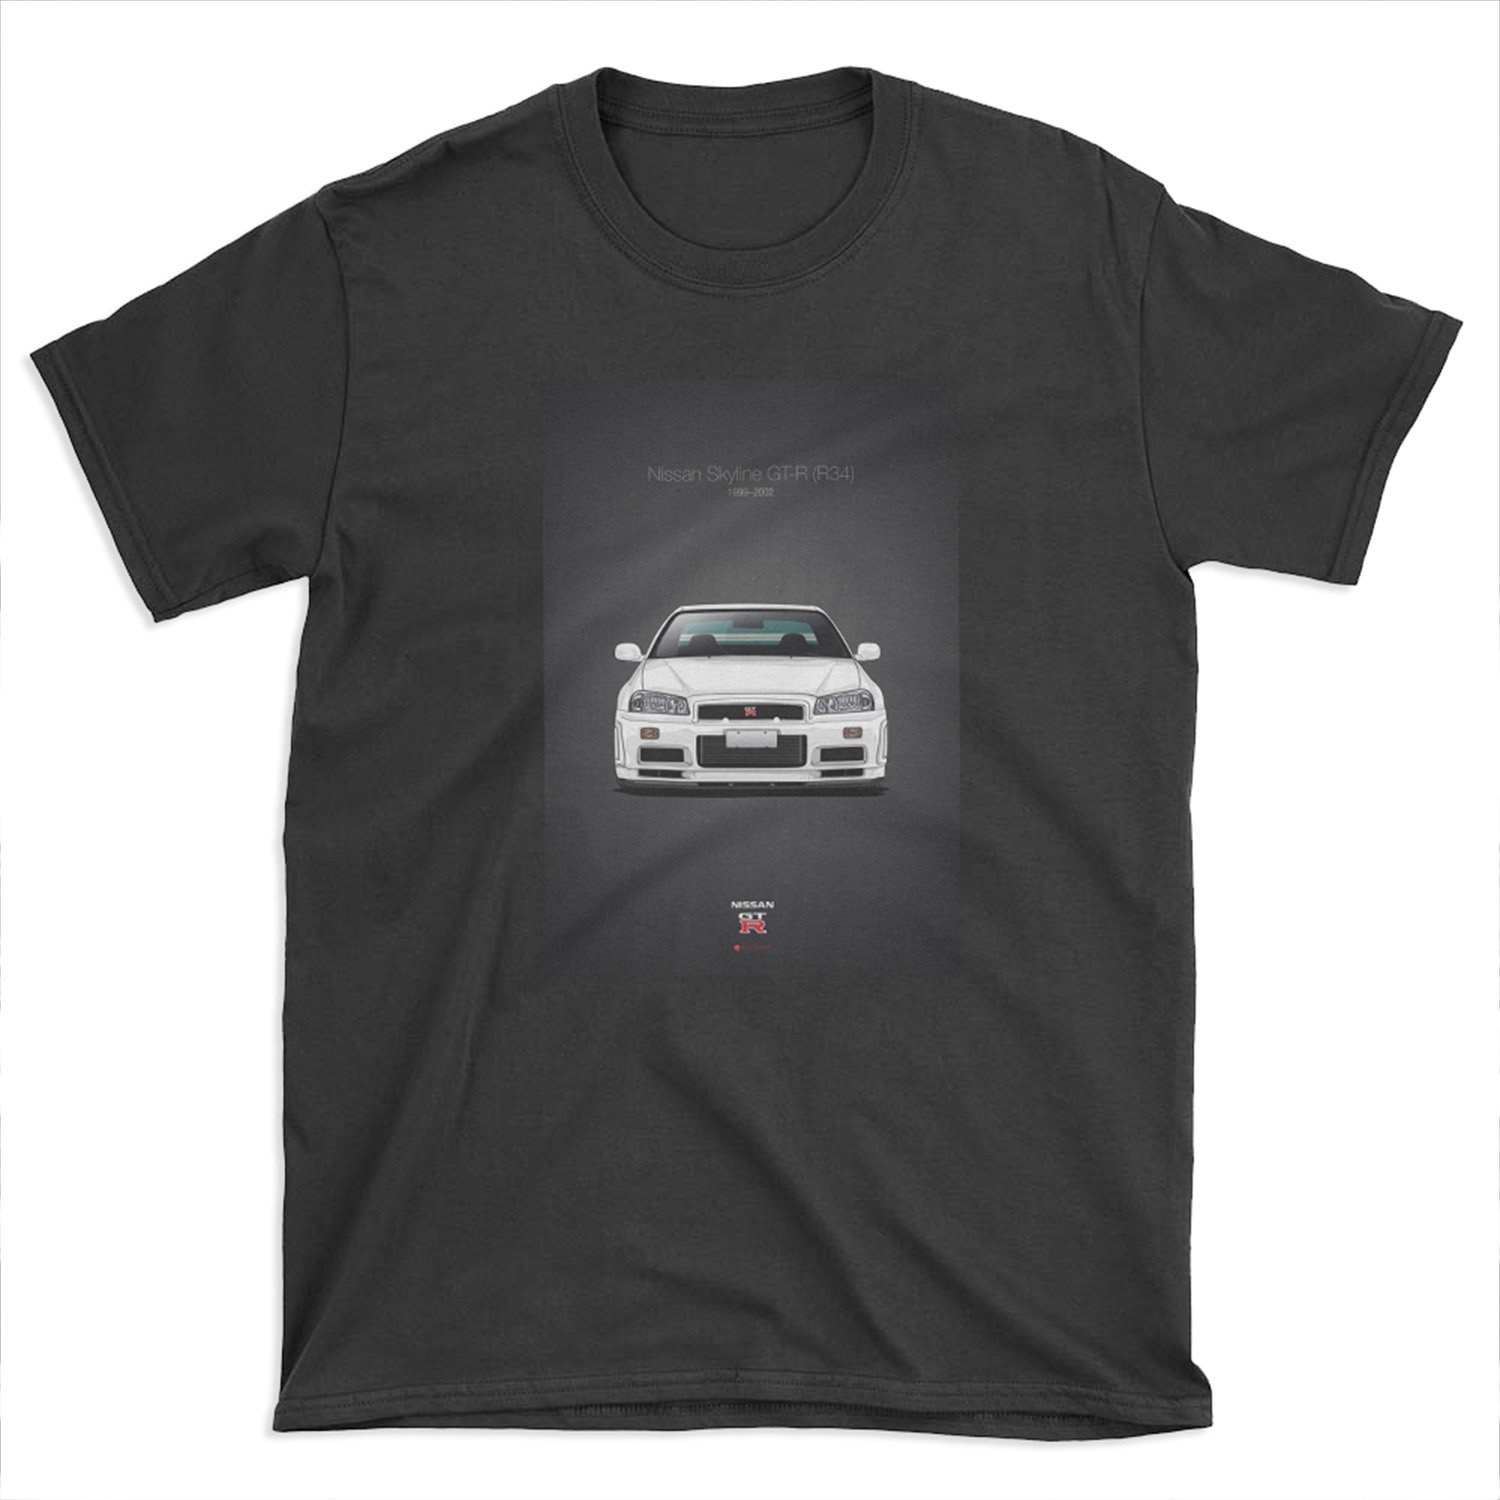 Nissan Skyline GT-R (R34) T-shirt Tee - Chief T-shirt